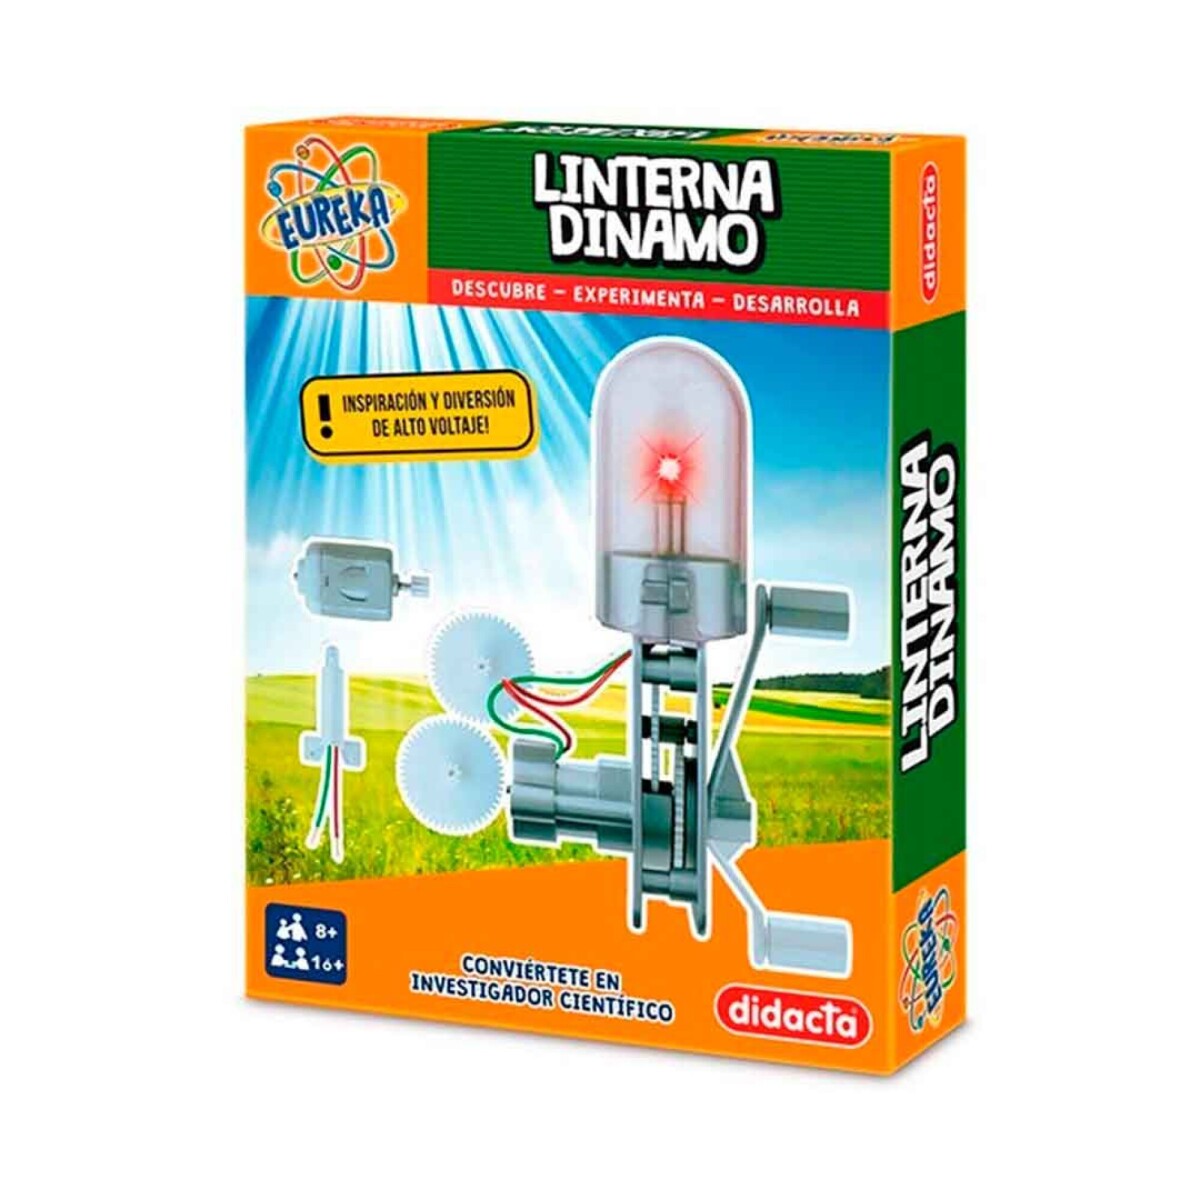 Linternas Dynamo - BIOWEB® Colombia